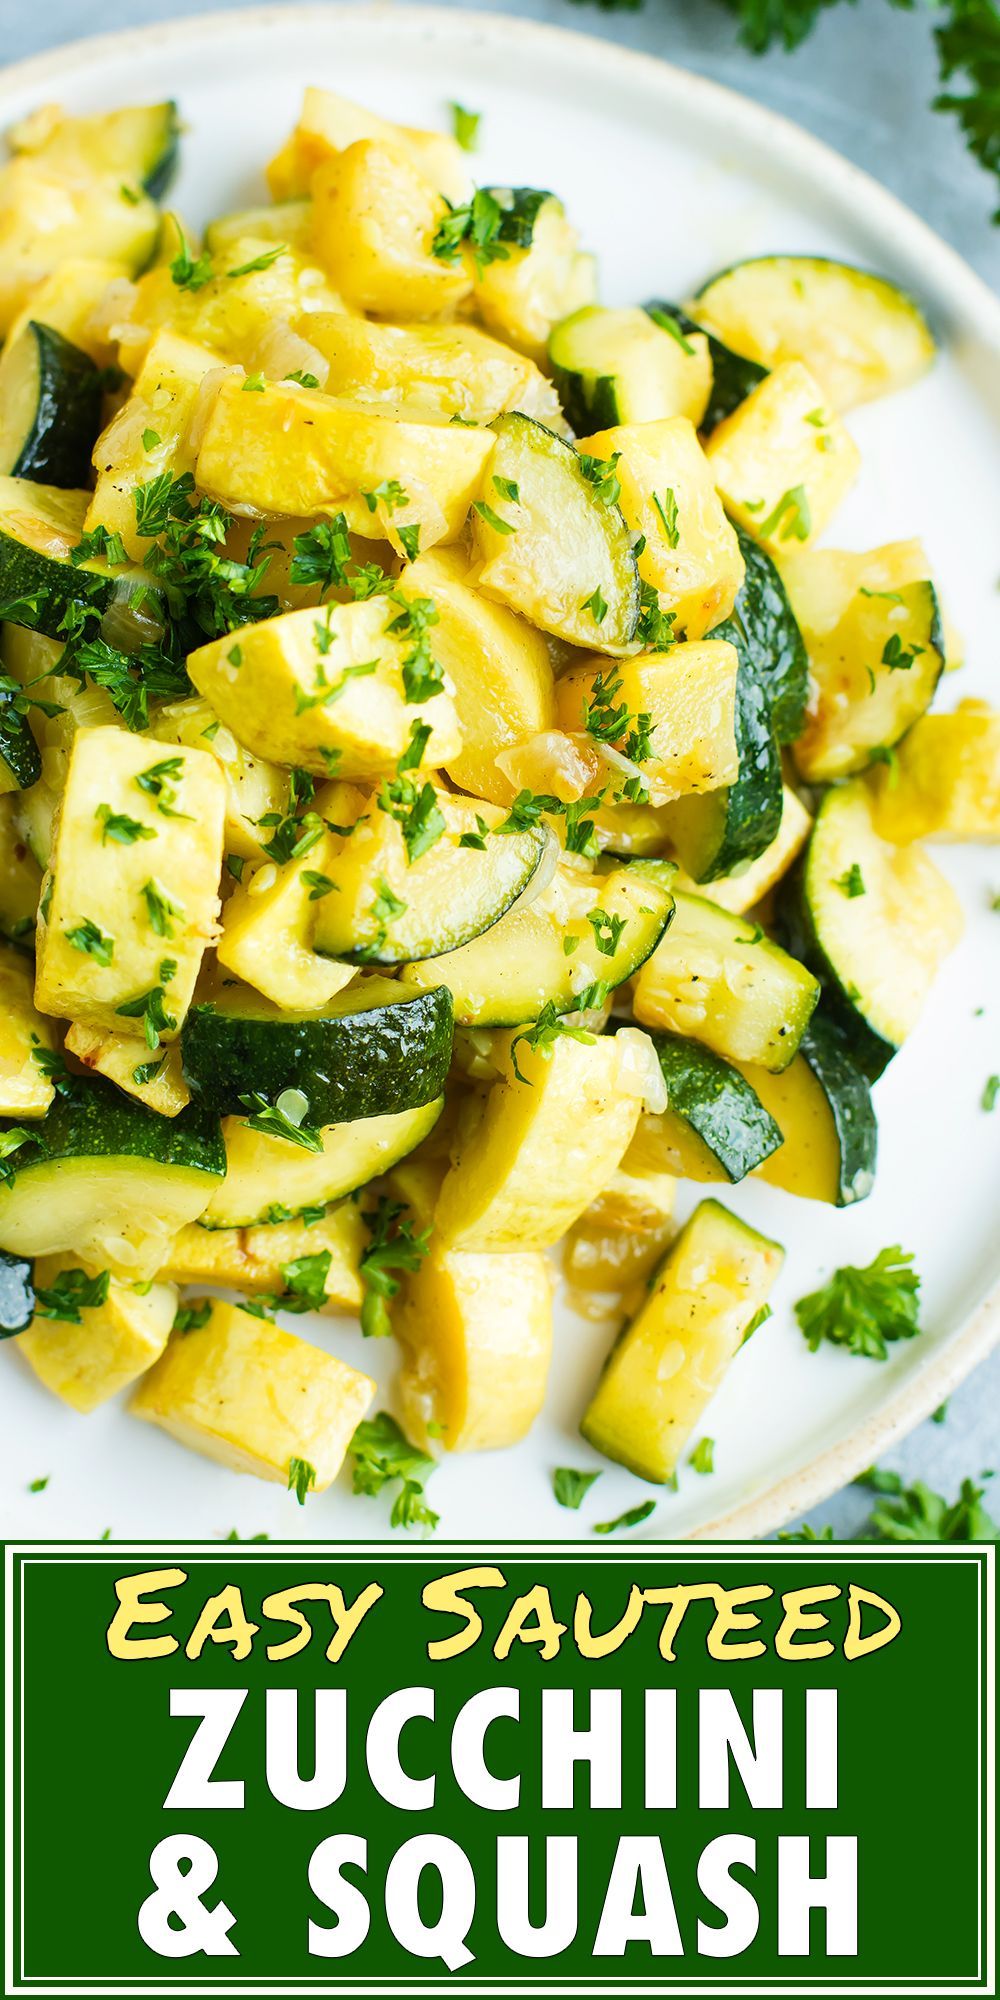 17 healthy recipes Zucchini whole30 ideas